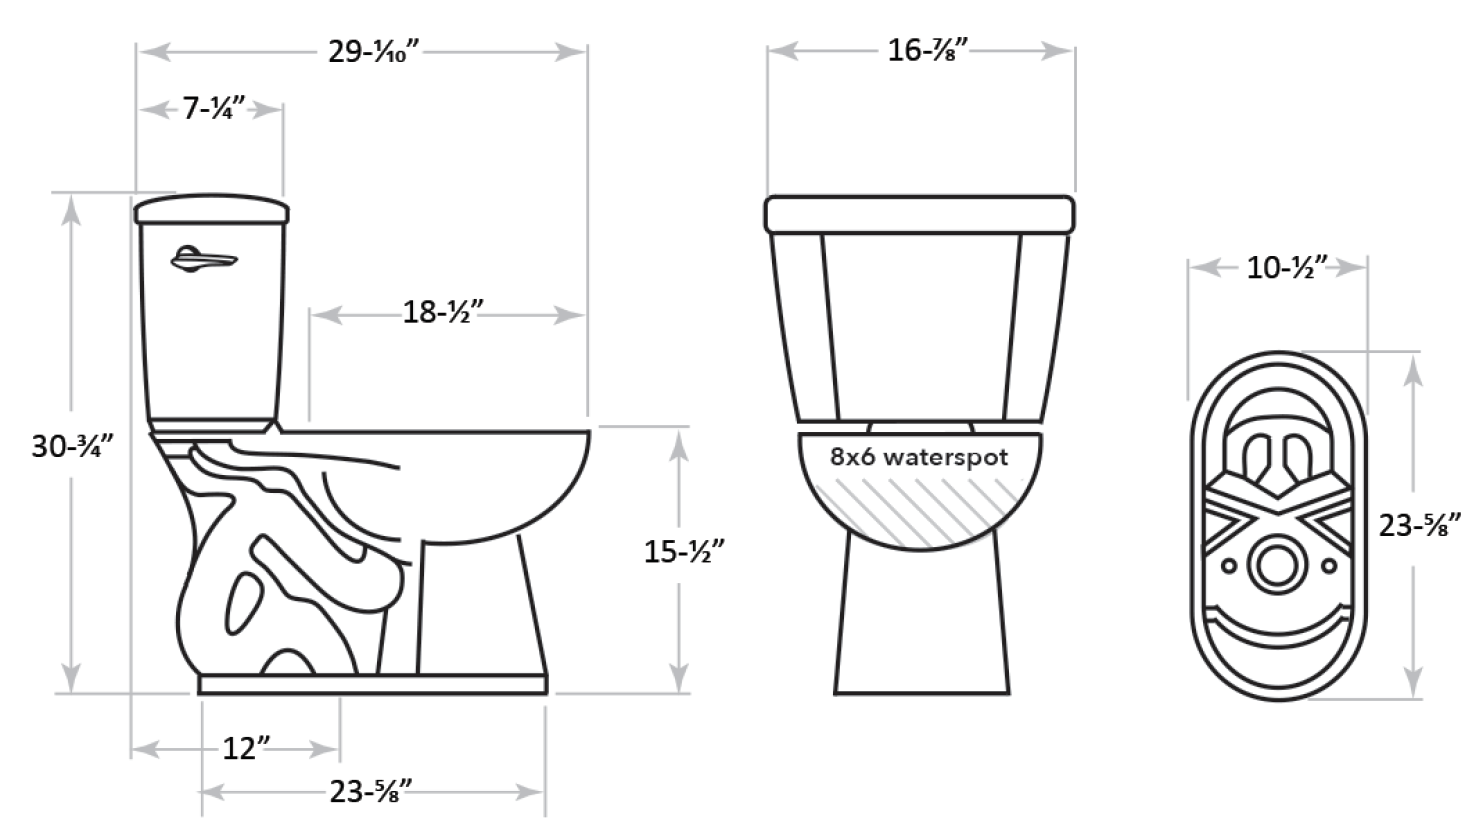 Sabre 12" elongated toilet technical info